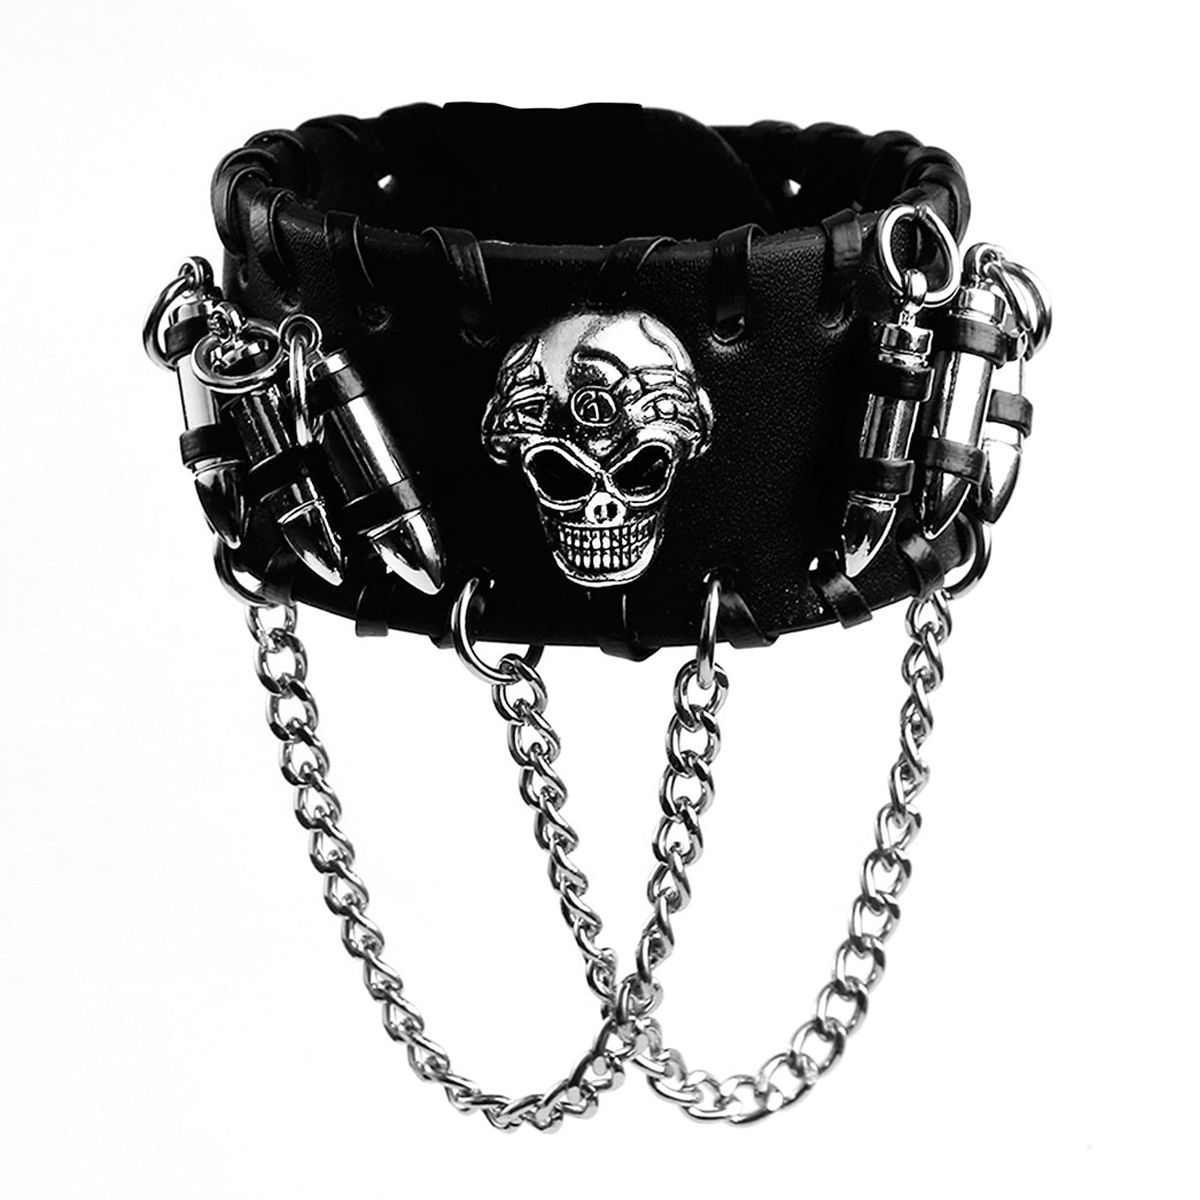 Stylish punk bracelet skeleton faux leather adjustable buckle wristband with chains 